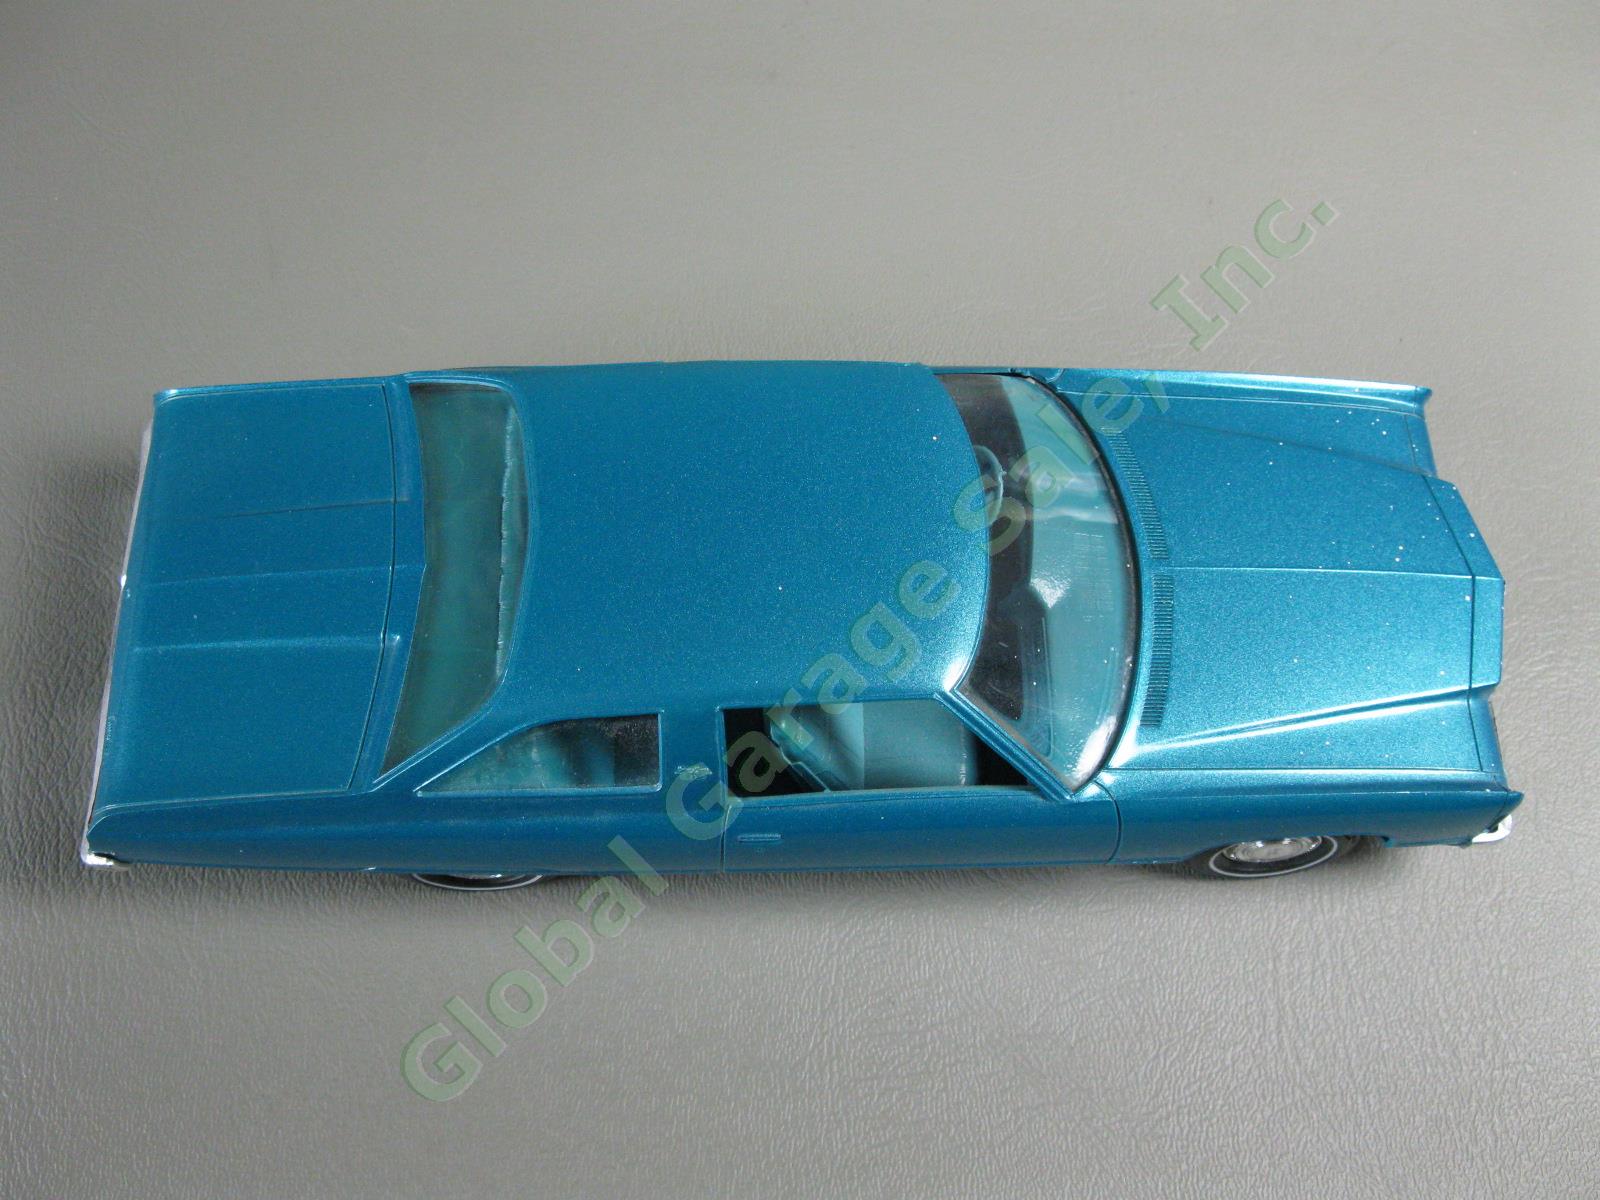 Original VTG 1974 Chevrolet Caprice Classic Blue Plastic Dealer Promo Model Car 5